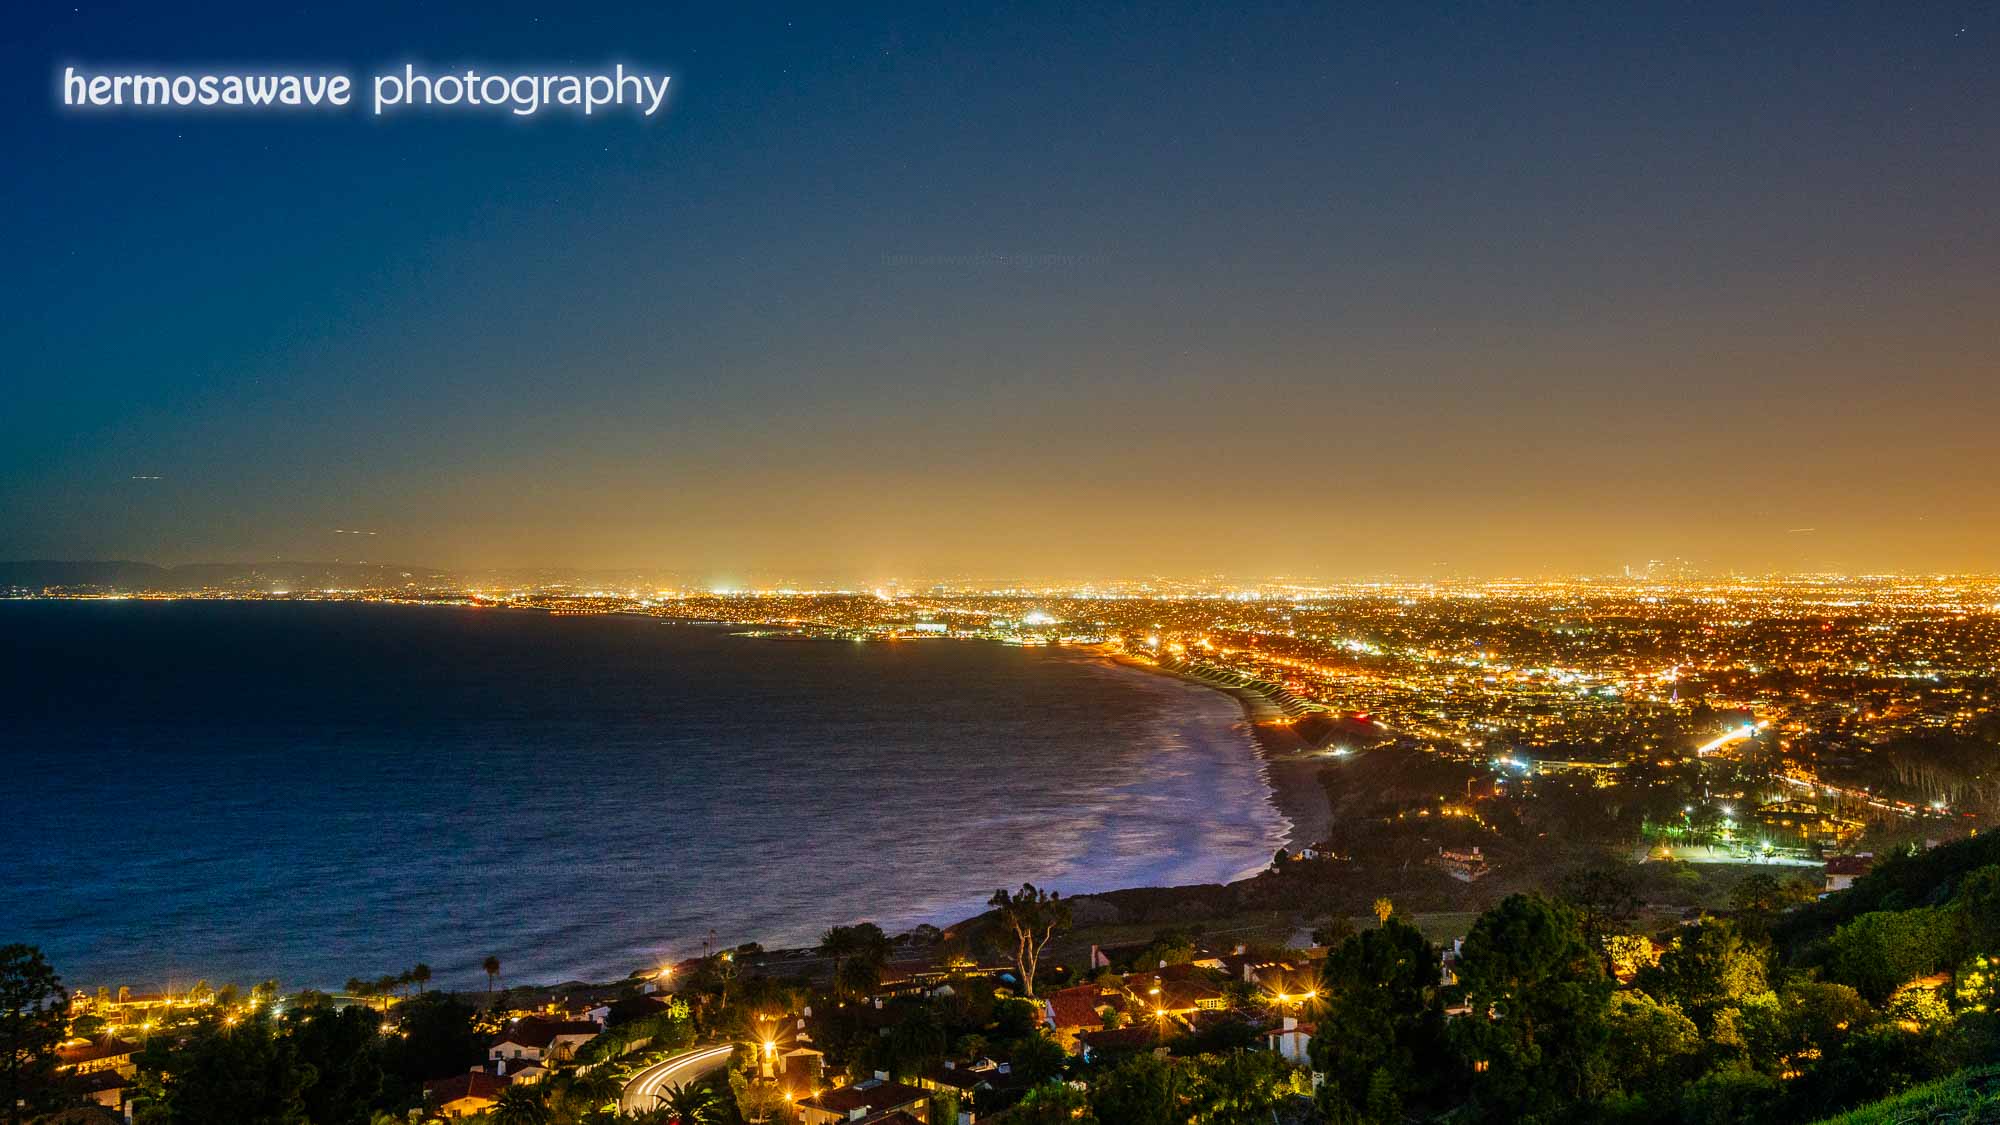 Last Light on the Santa Monica Bay